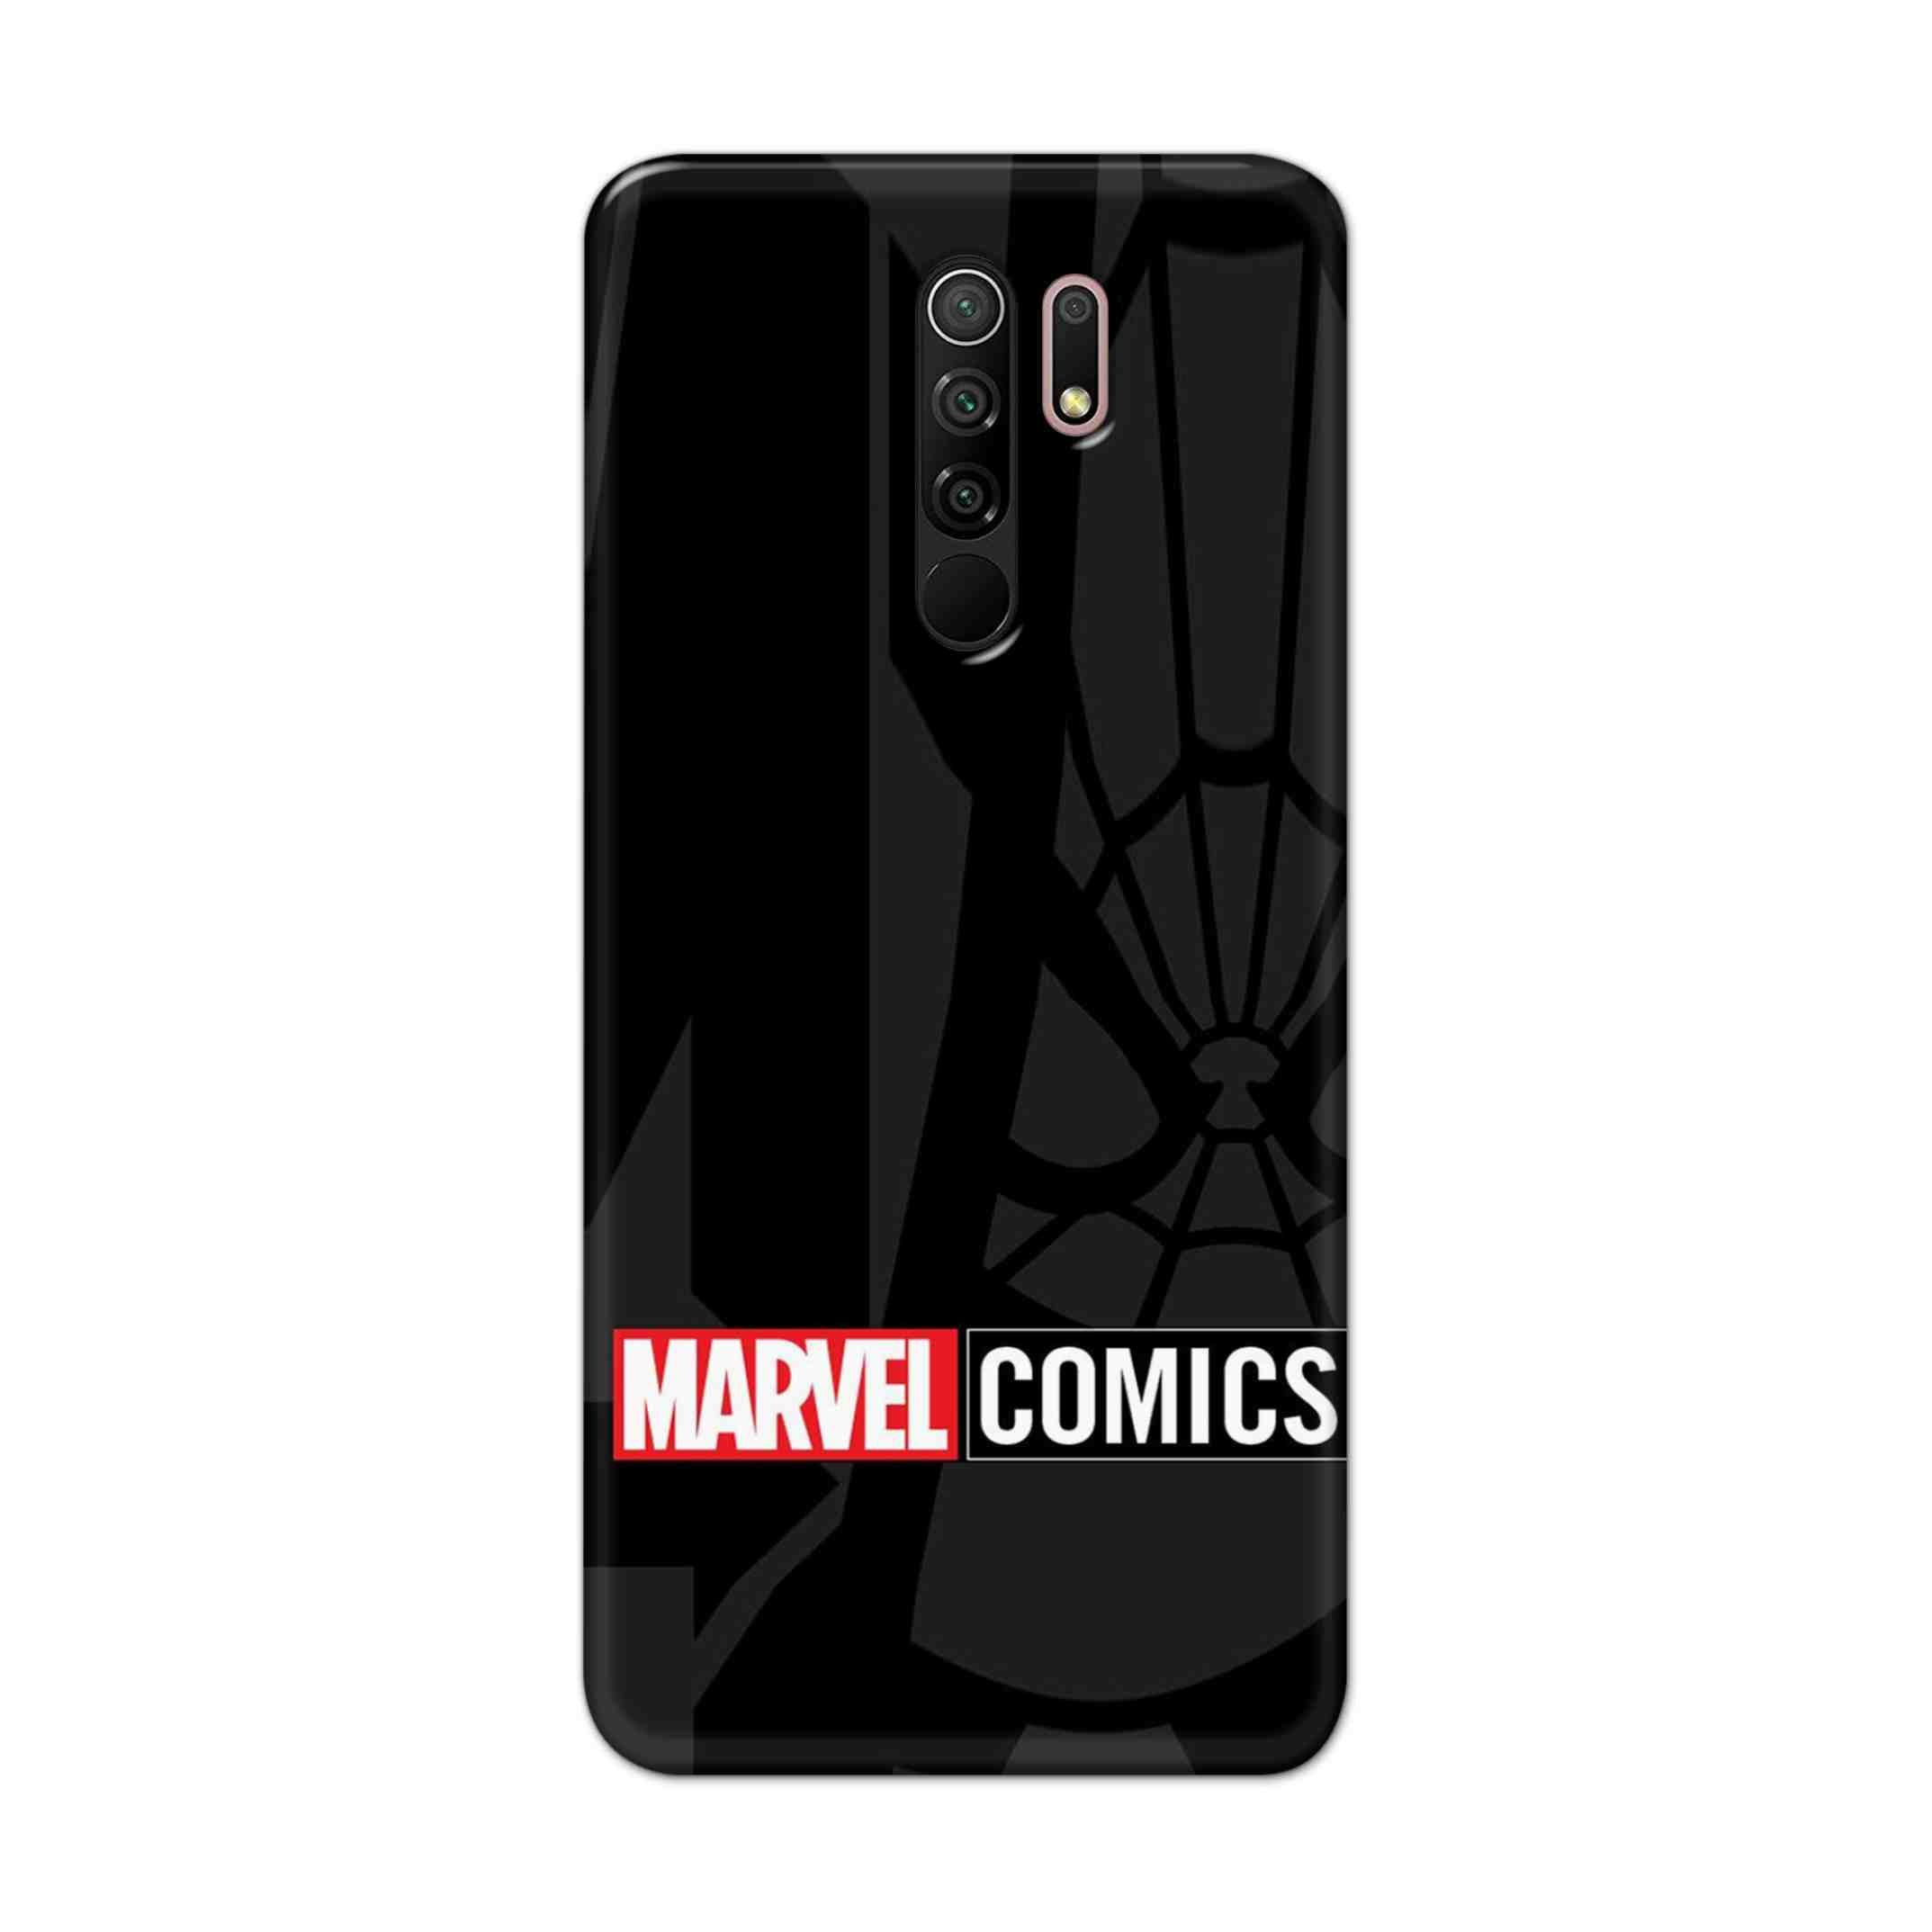 Buy Marvel Comics Hard Back Mobile Phone Case Cover For Xiaomi Redmi 9 Prime Online